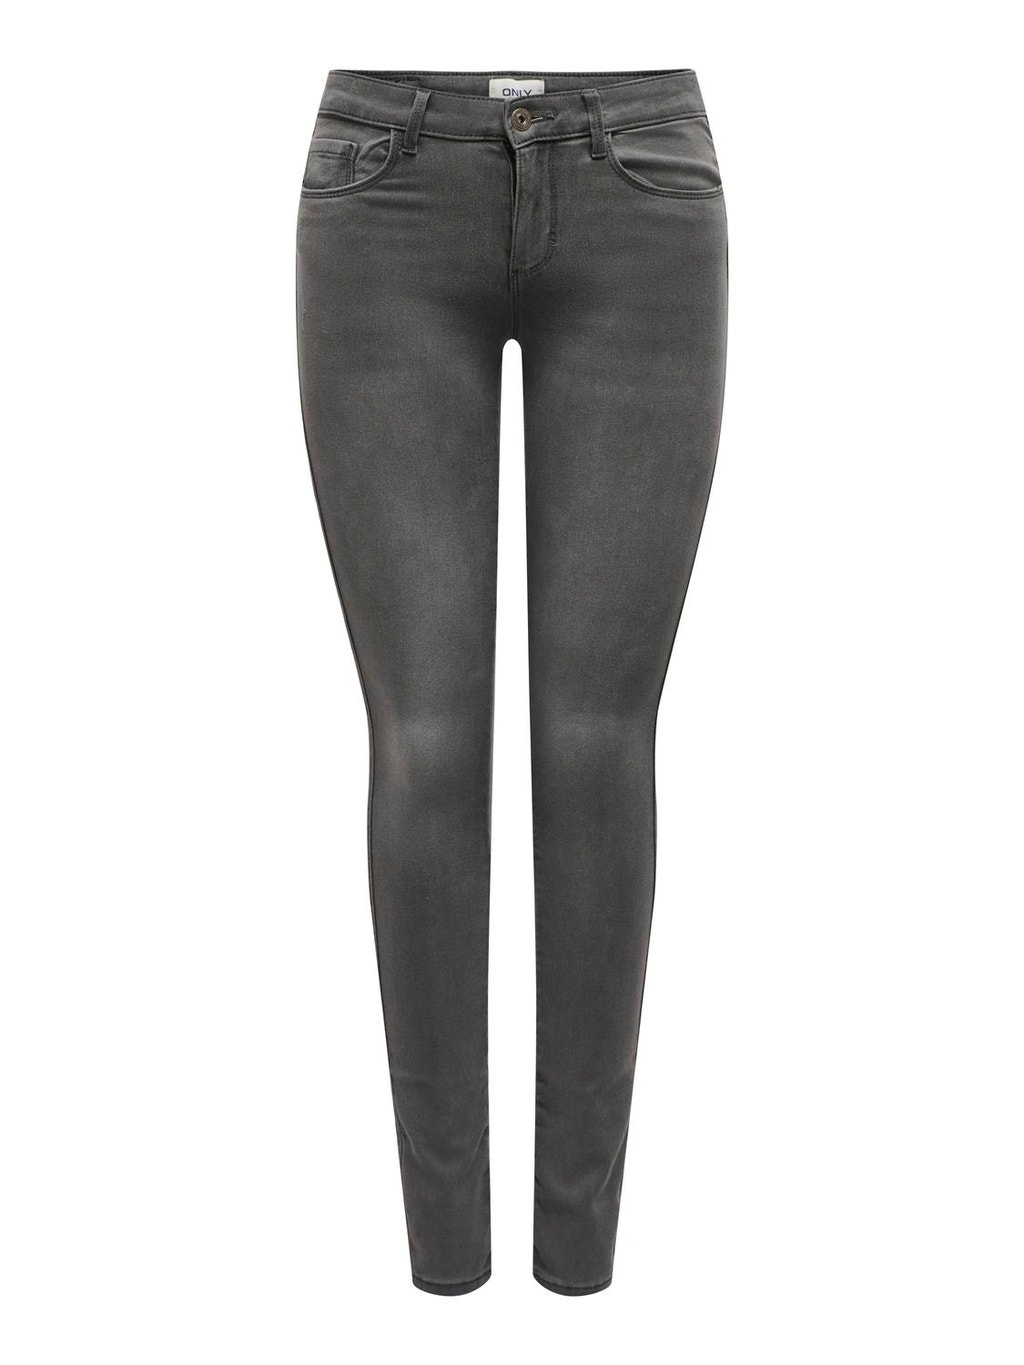 ONLRoyal reg Skinny fit jeans | Dark Grey | ONLY®